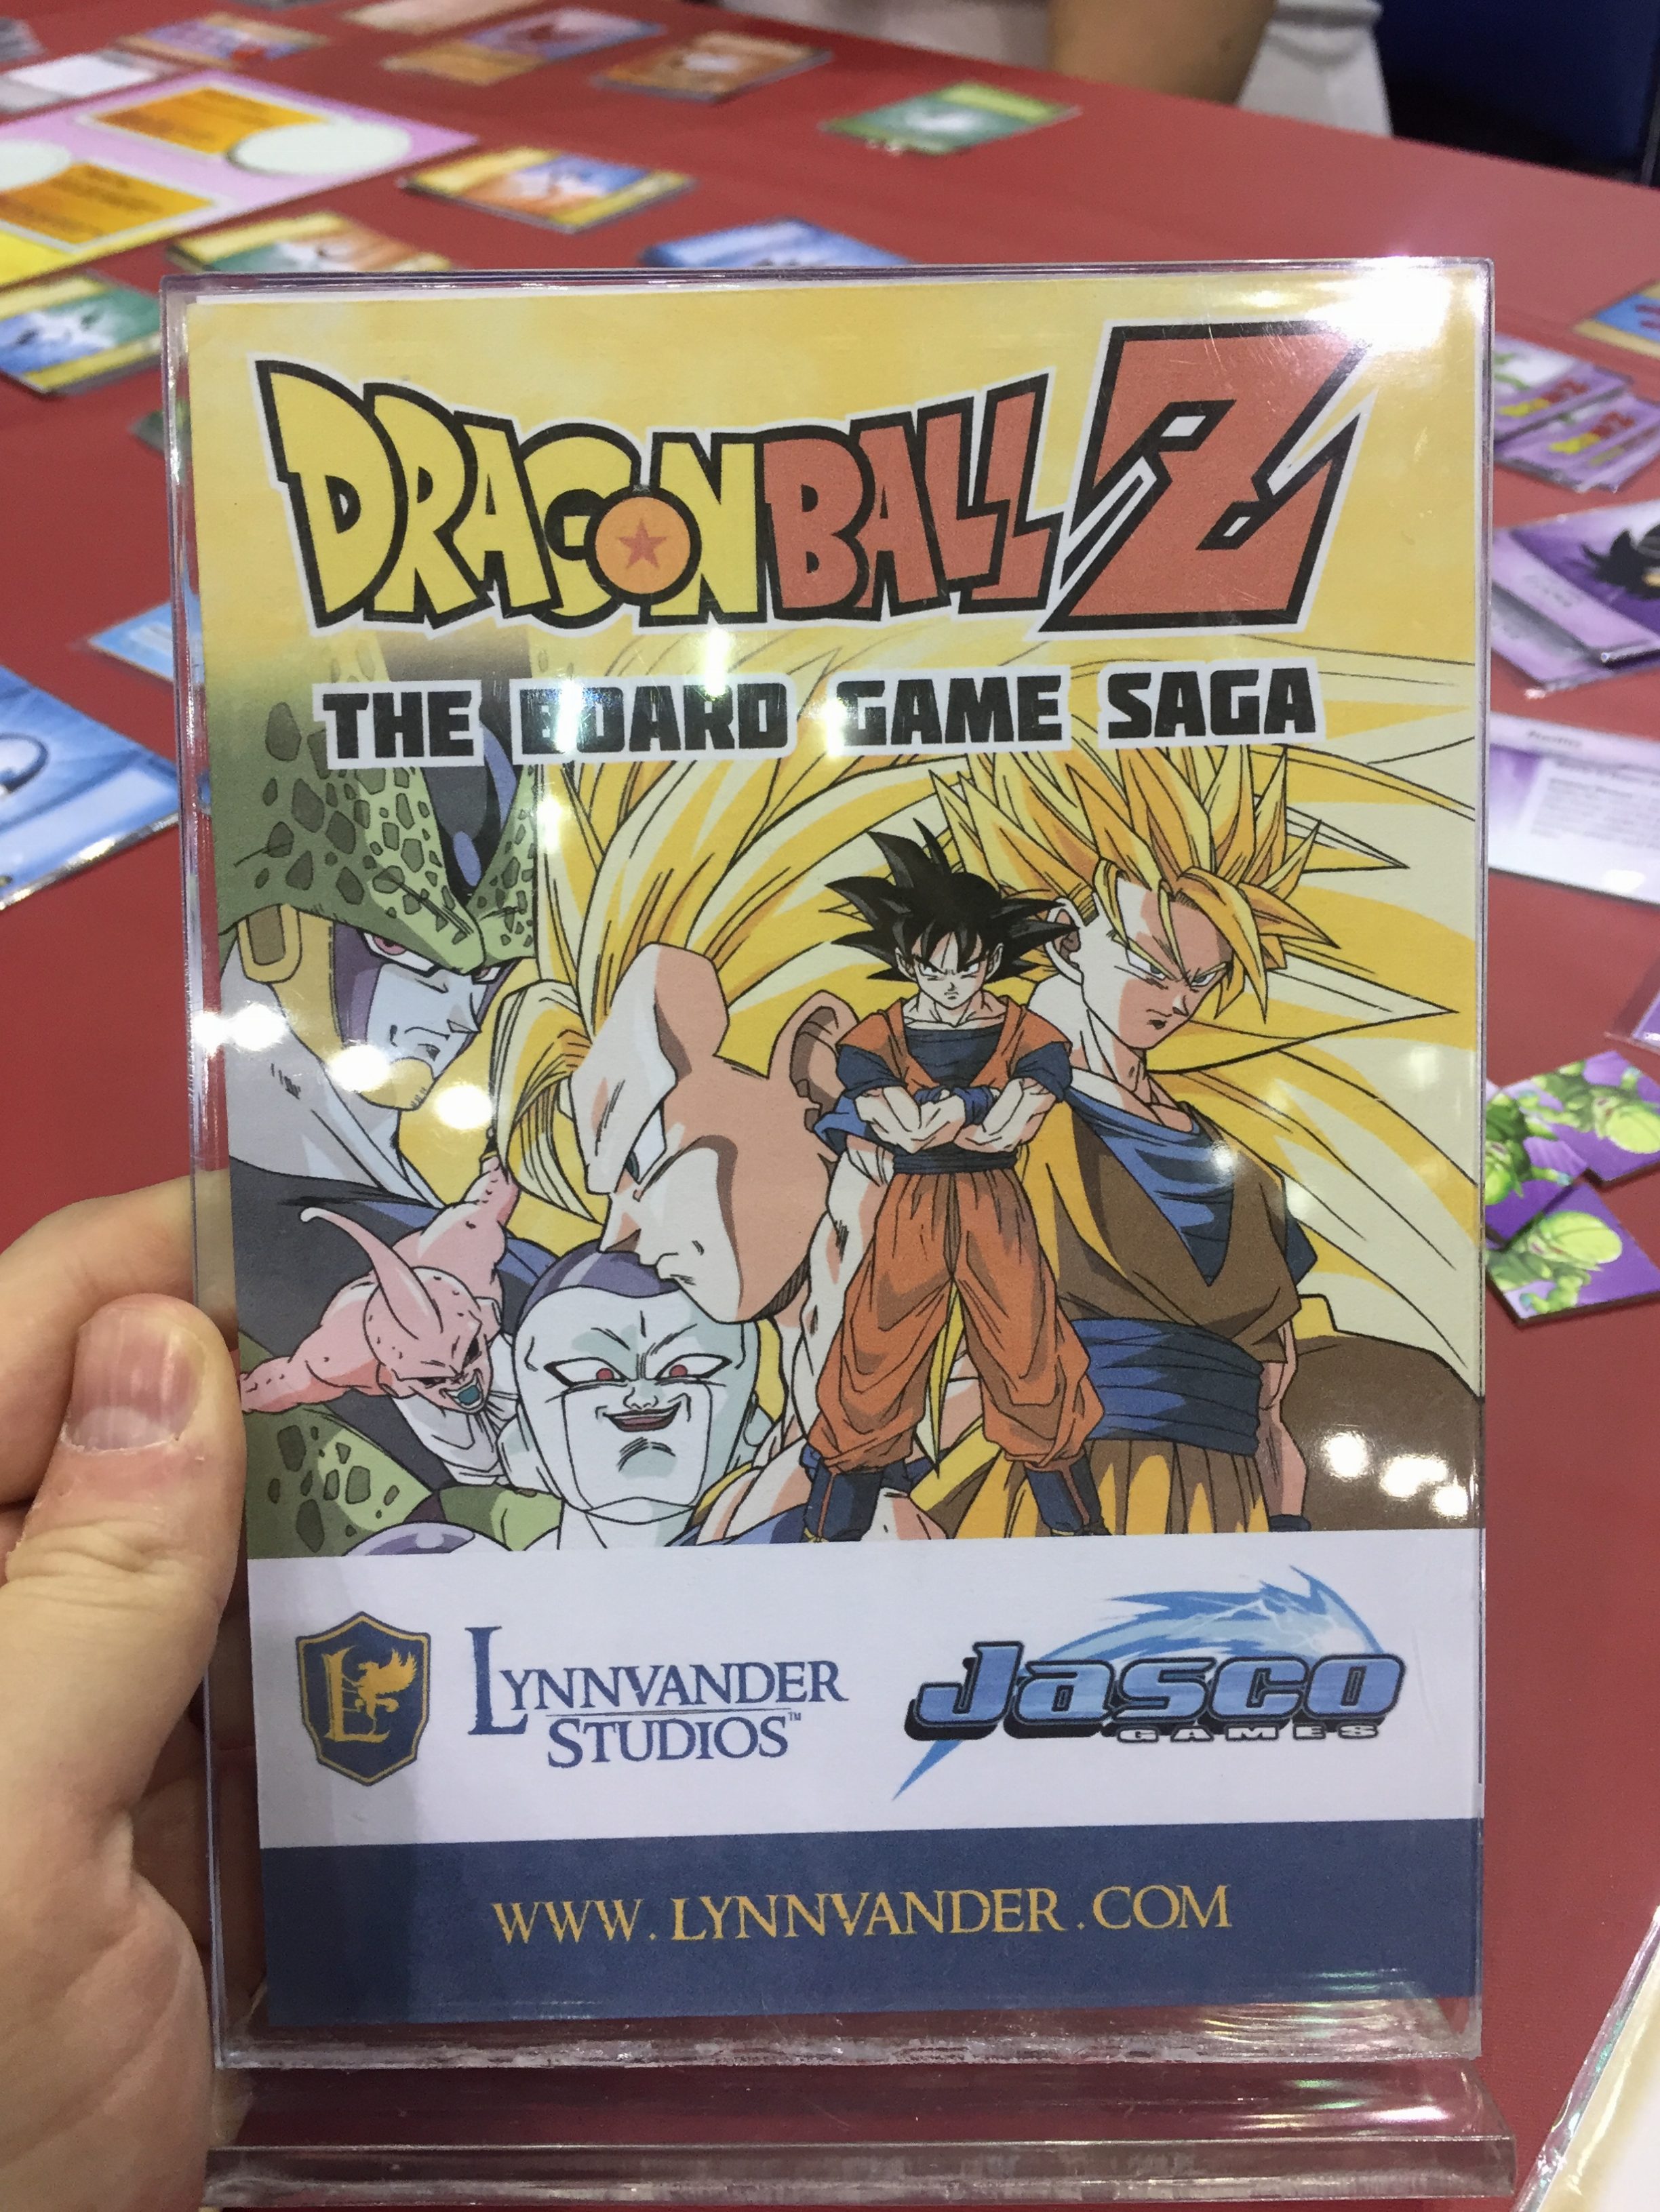 Dragon Ball Z: The Board Game Saga